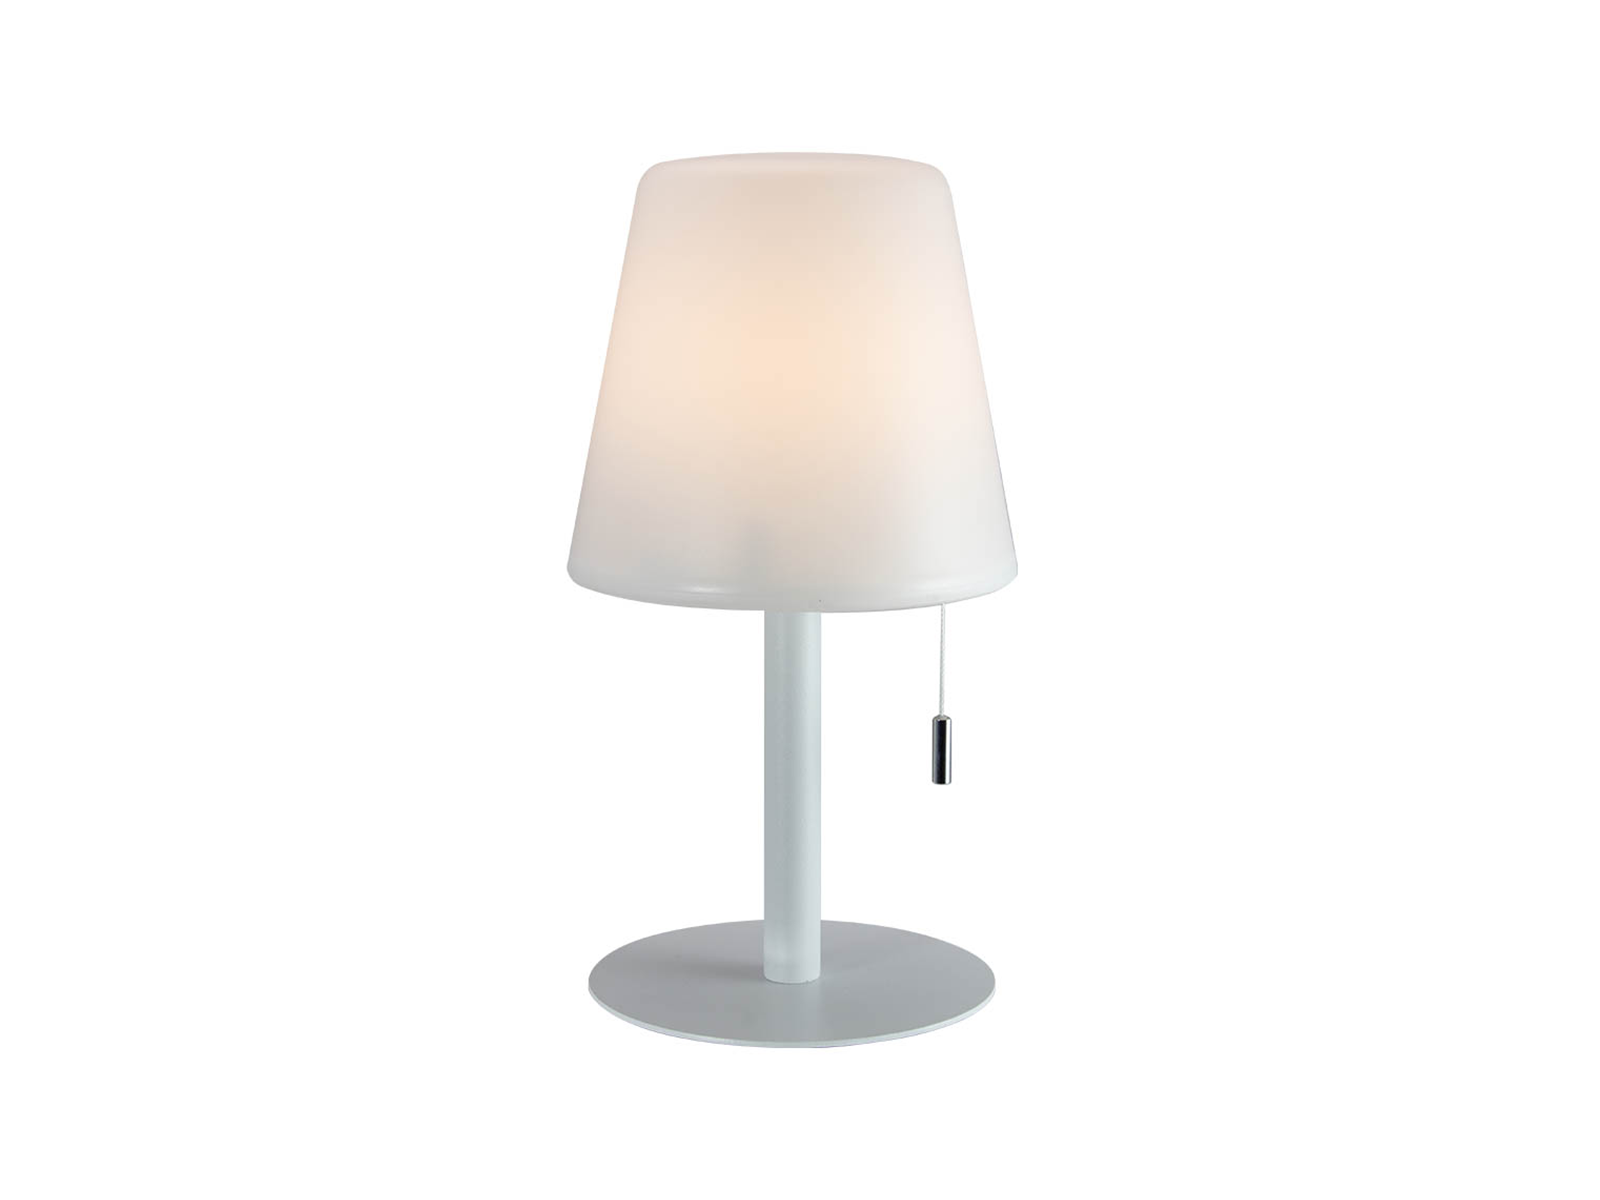 Stolní LED lampa Pino matně bílá, 2,6W, RGB, 30cm